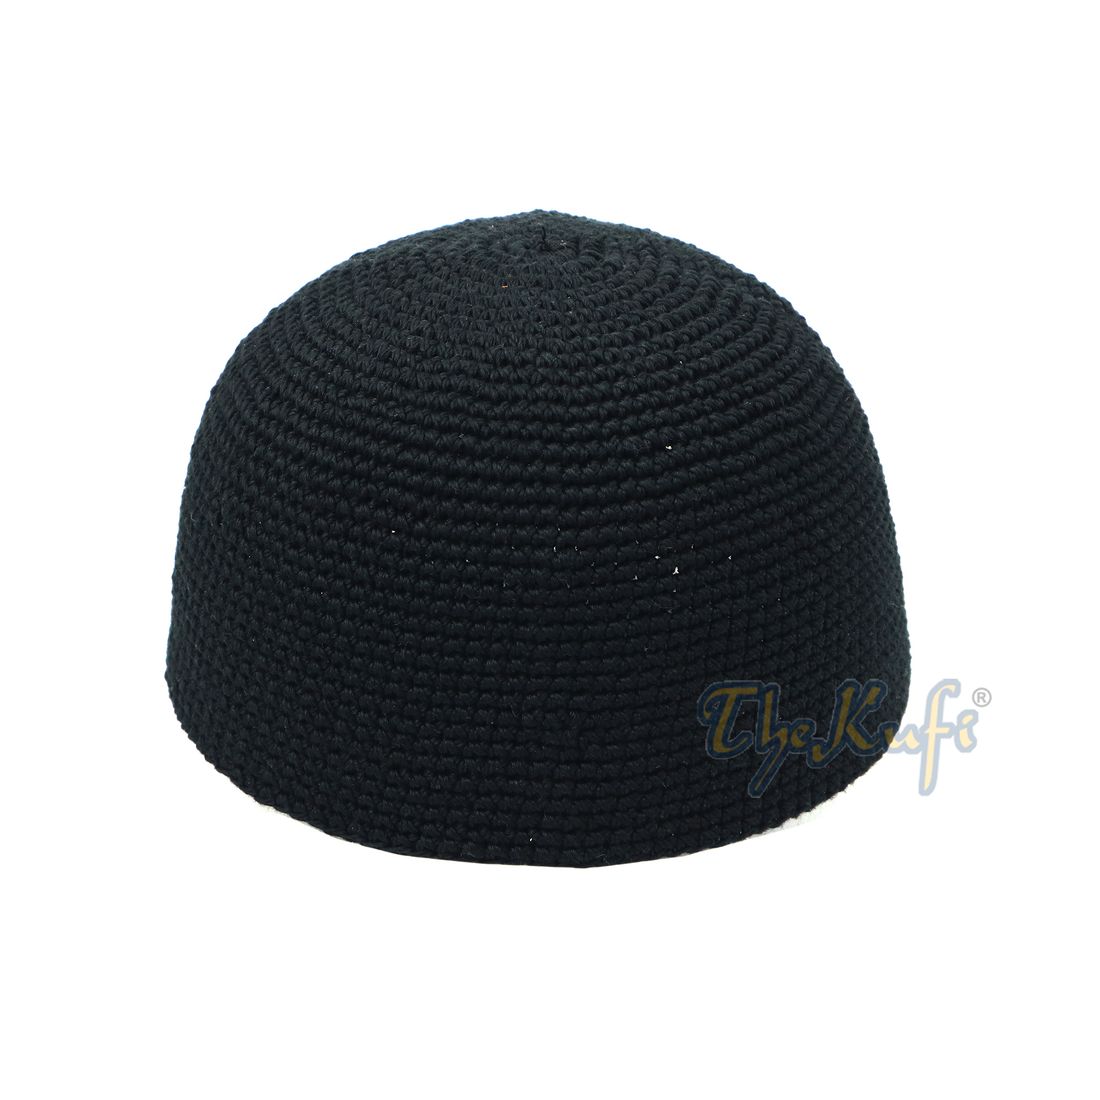 Plain Black Hand-crocheted 100% Cotton Kufi Cap Comfortable Fit